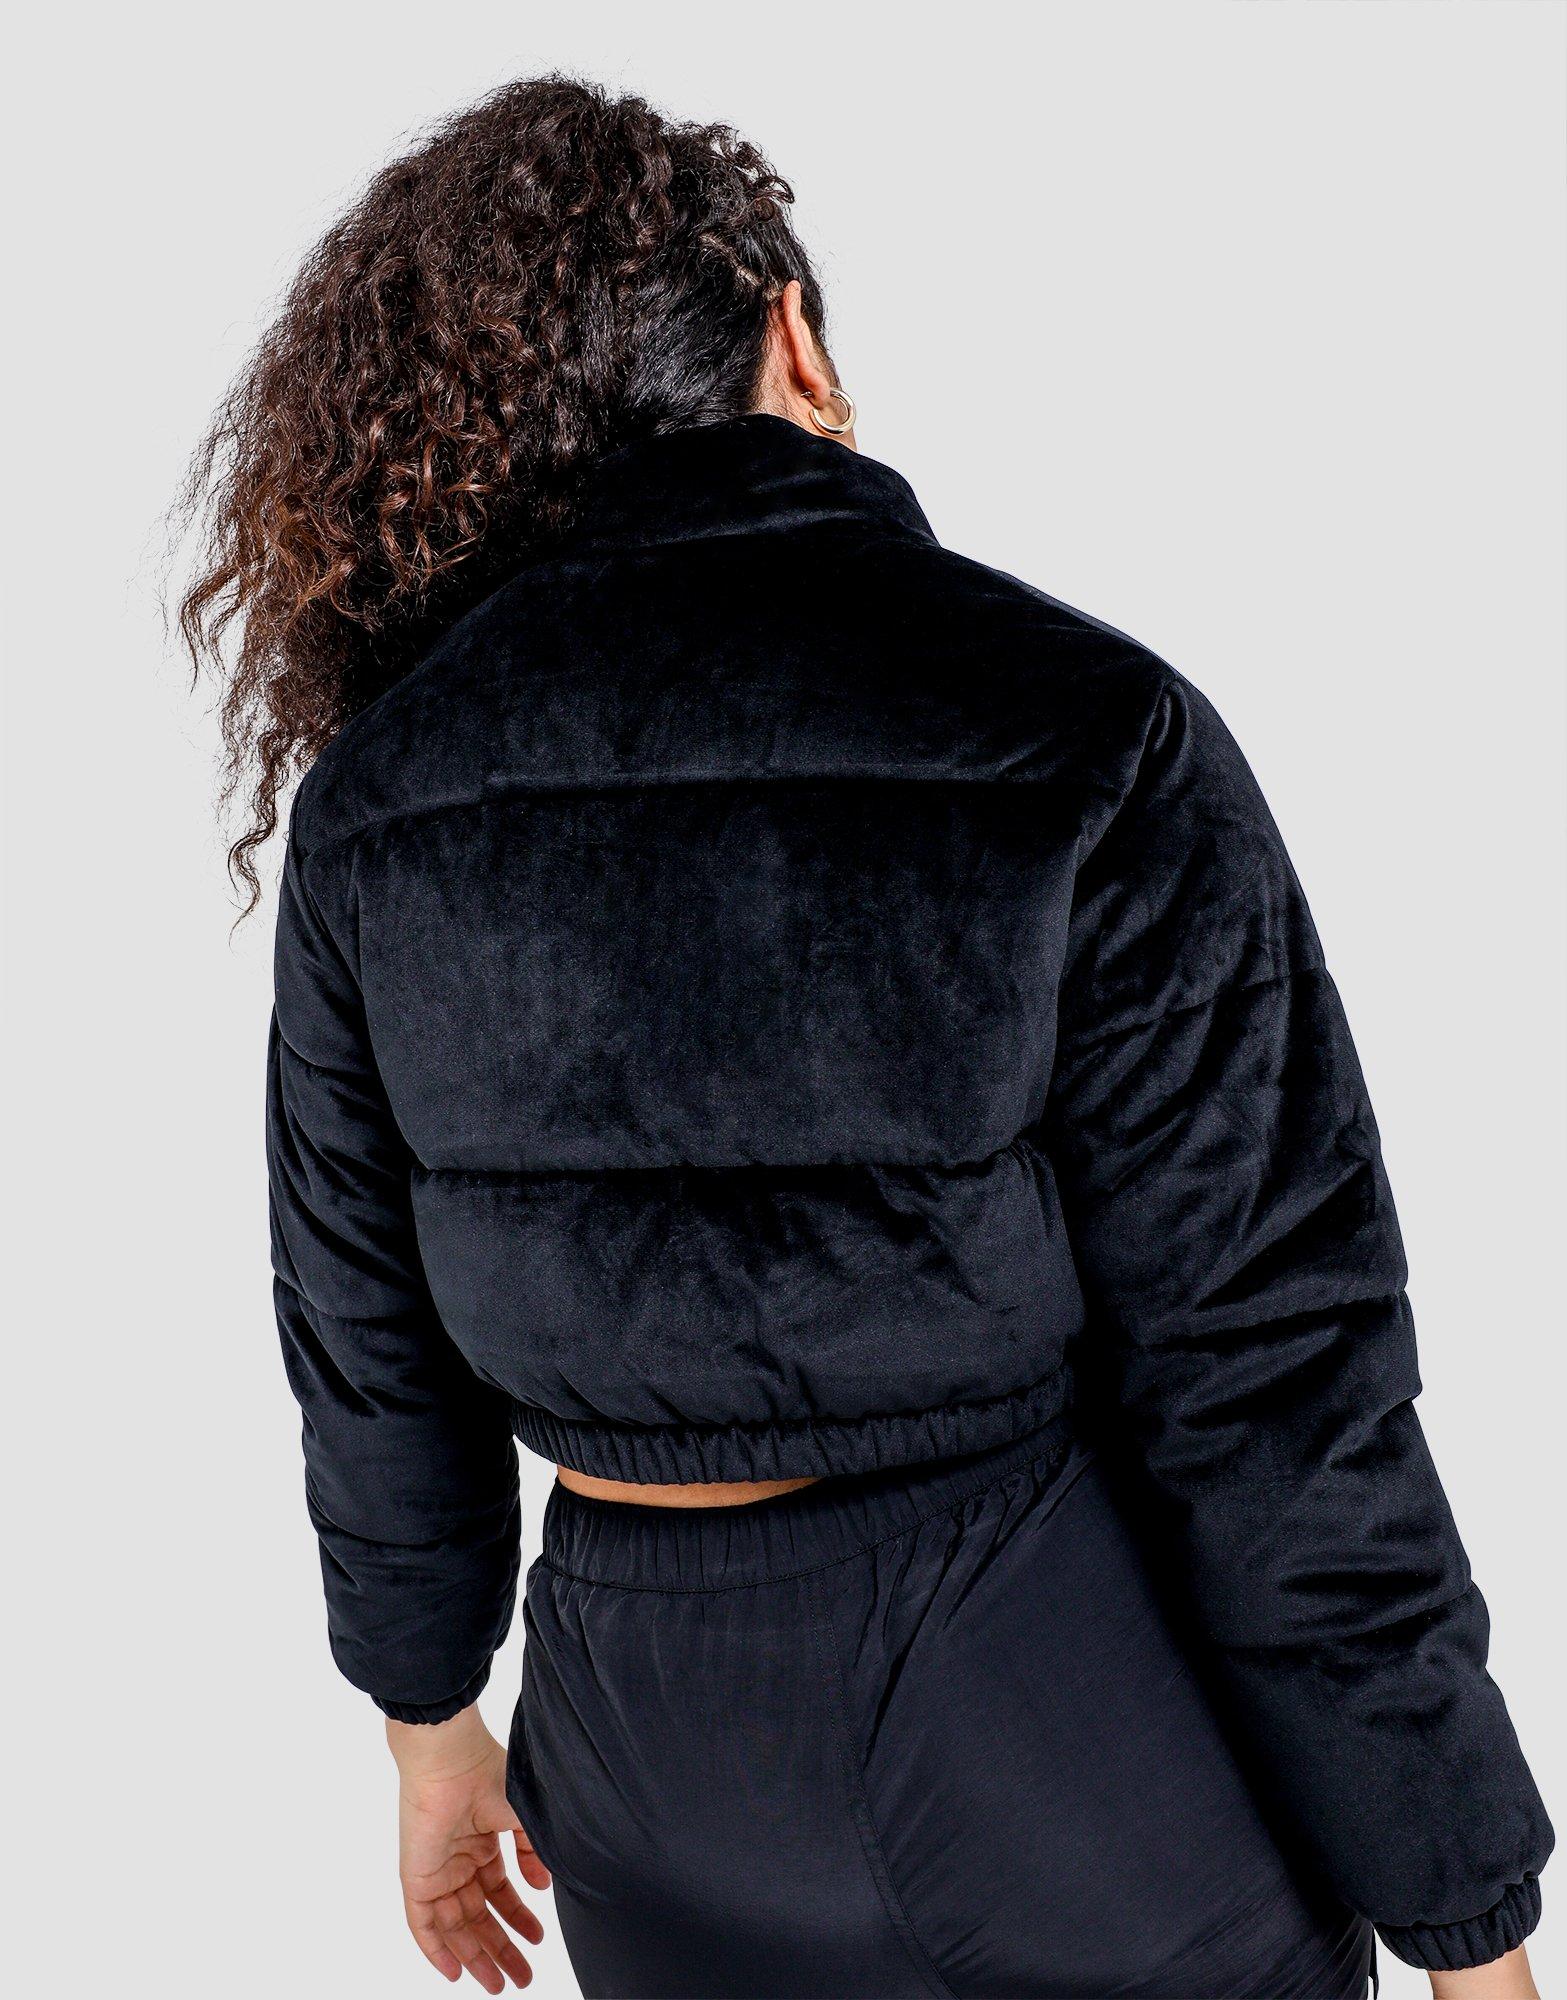 fila logo crop puffer jacket black